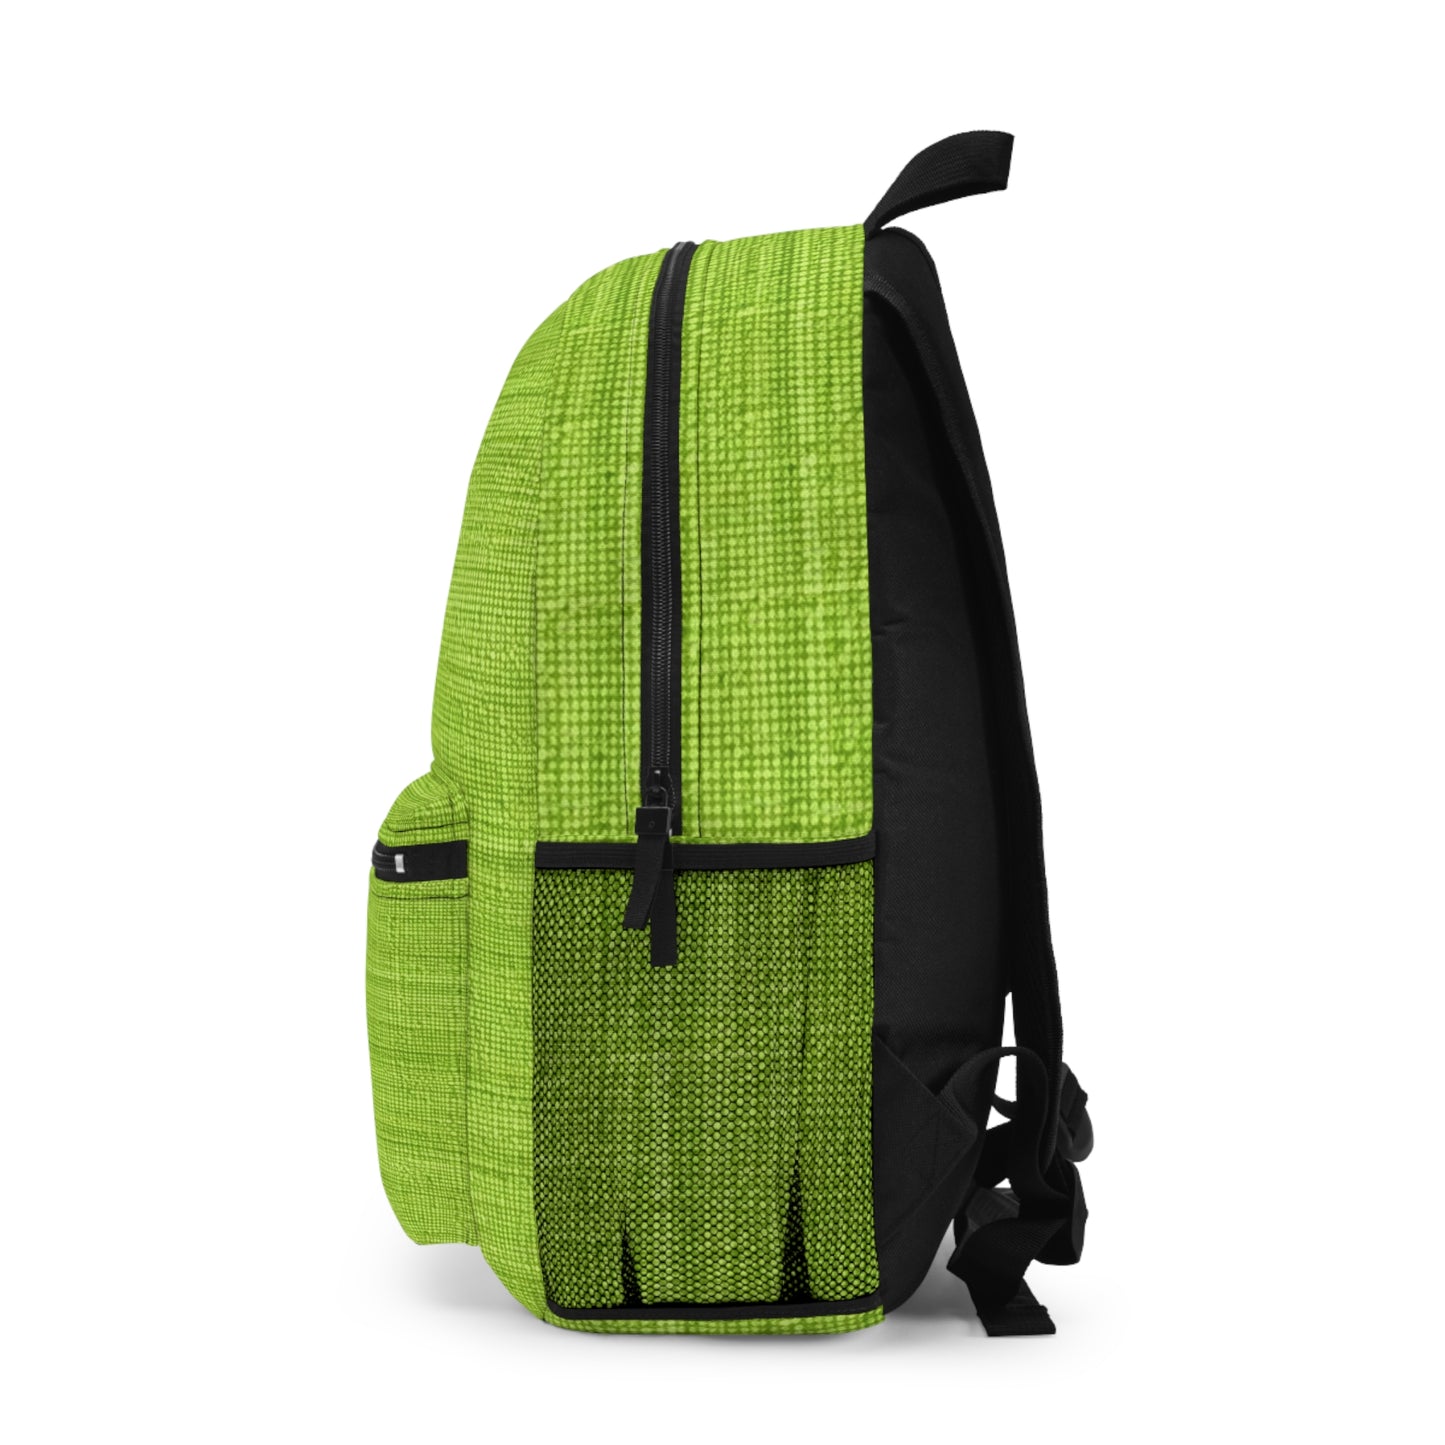 Lush Grass Neon Green: Denim-Inspired, Springtime Fabric Style - Backpack